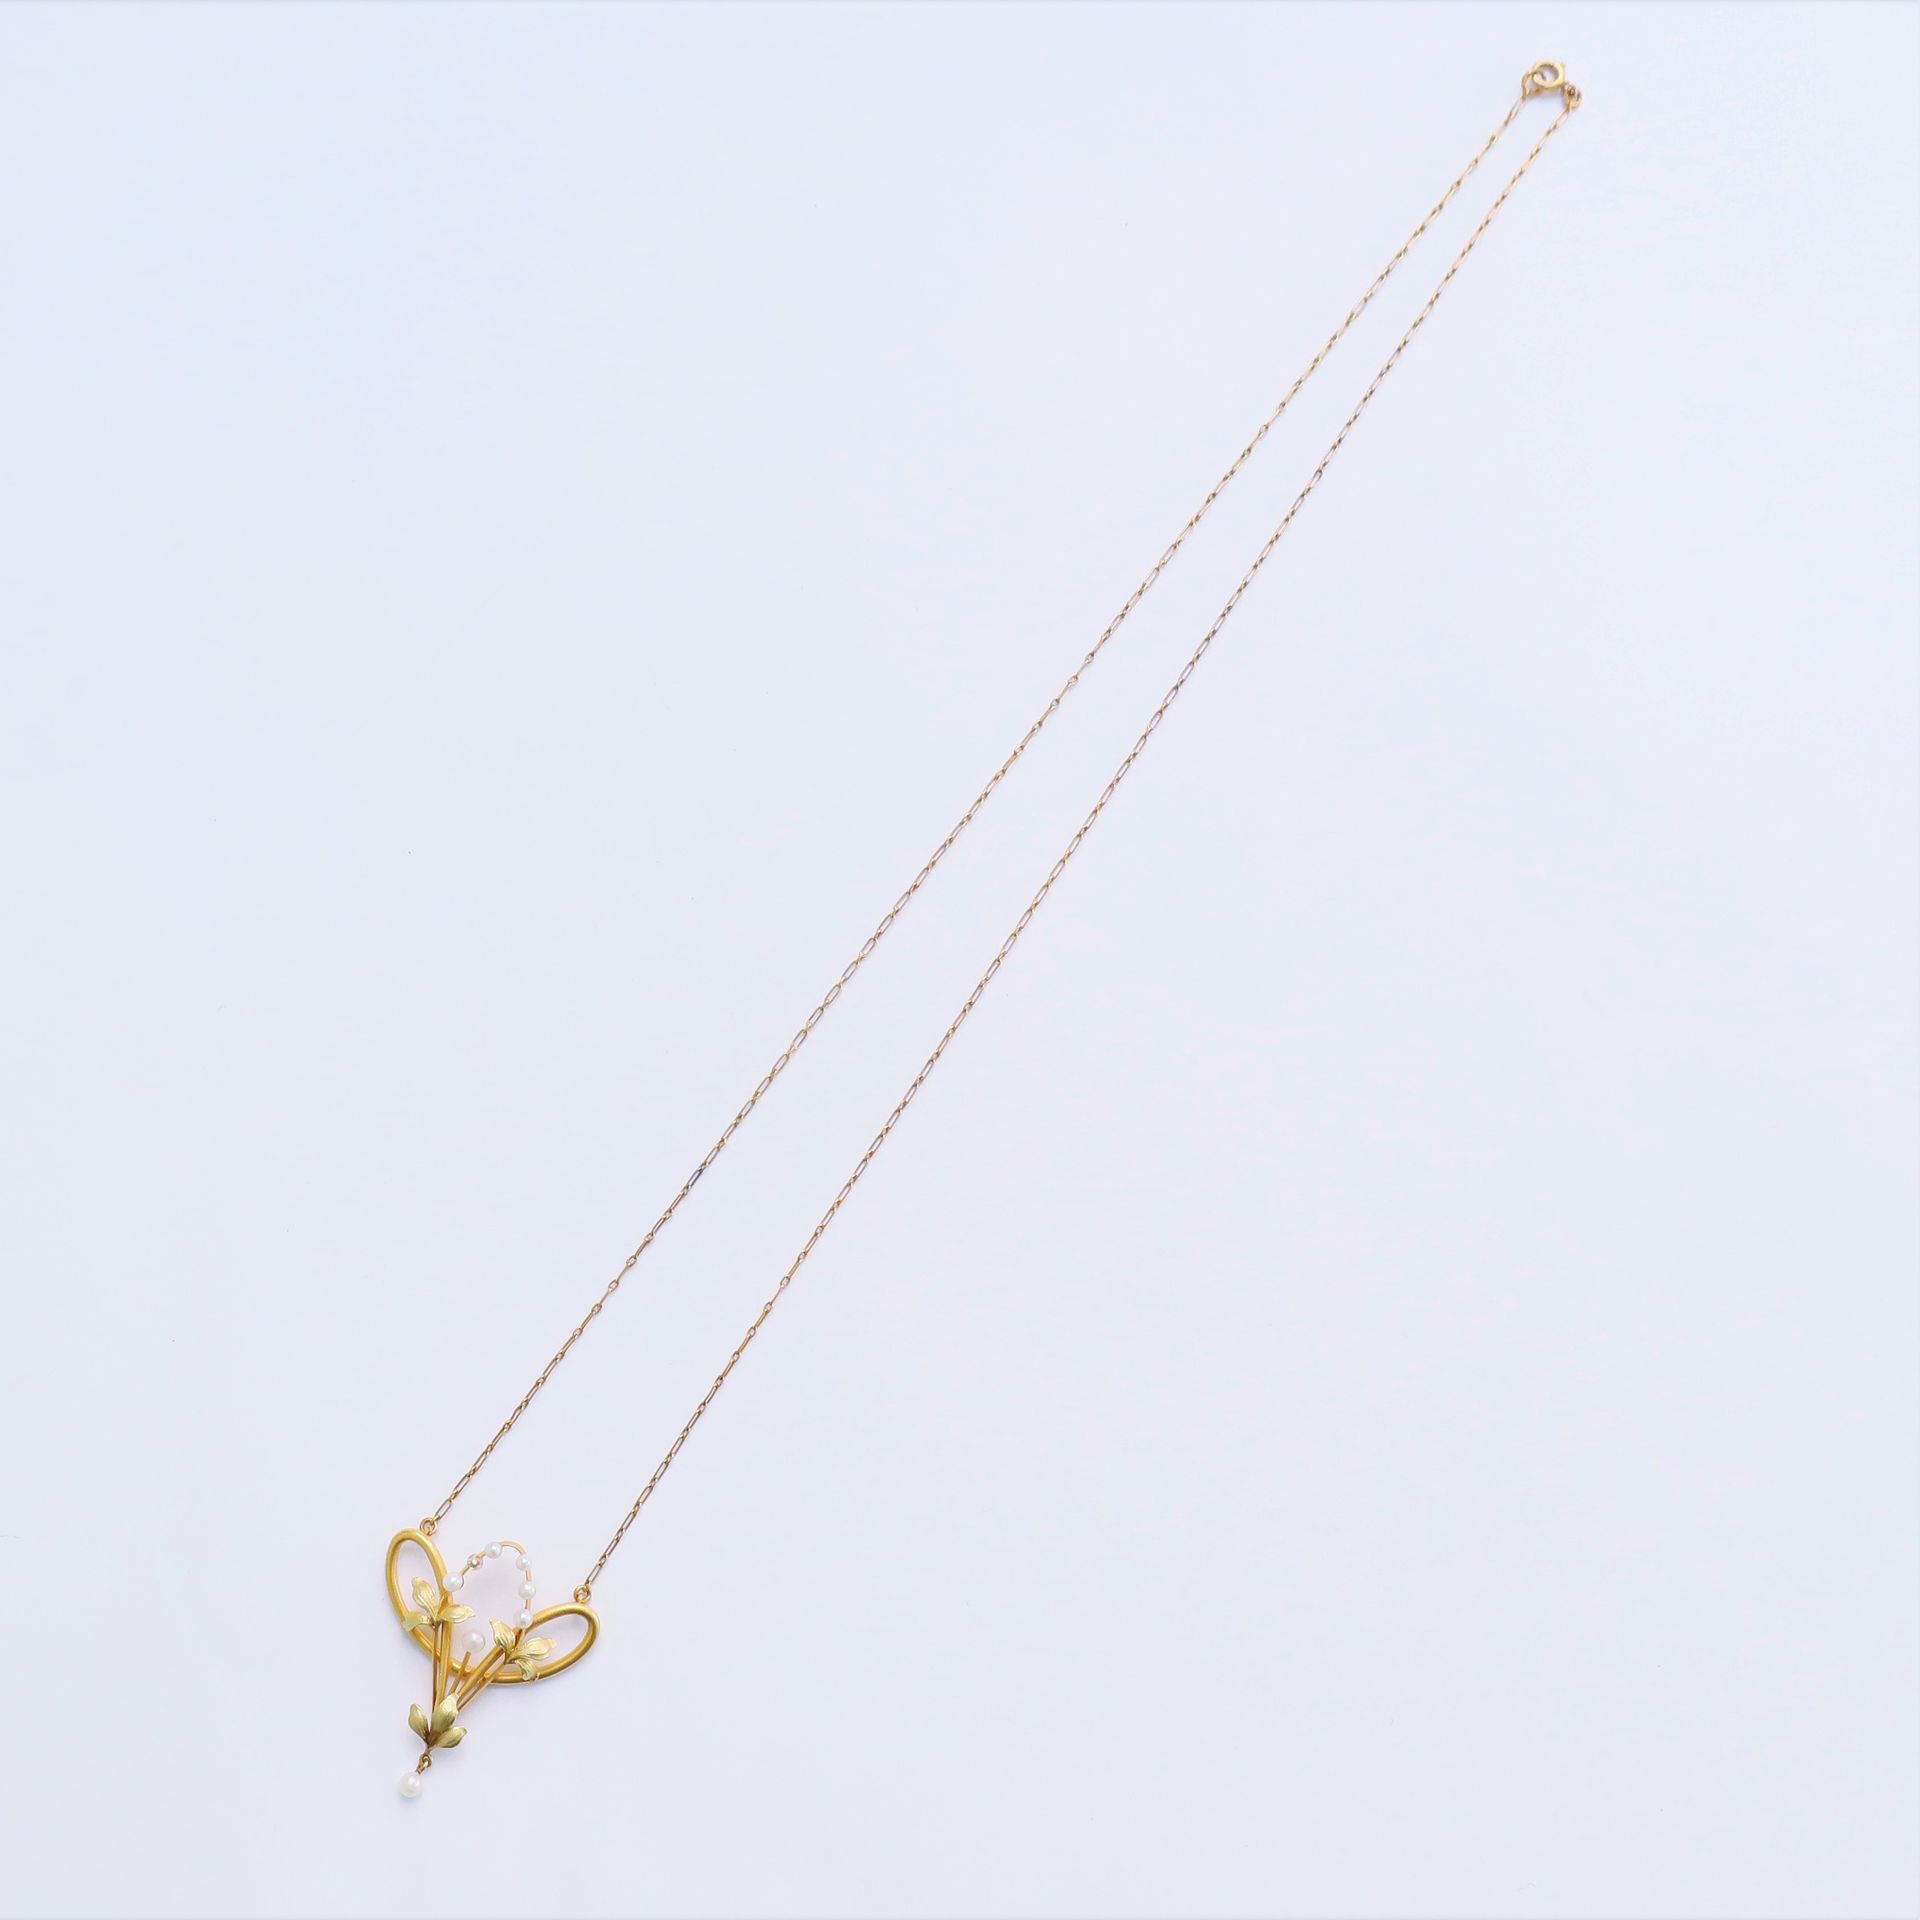 Null 一条双色18K(750)金项链，装饰有风格化的花卉图案和小珍珠。20世纪初的法国作品。毛重：4.5克（缺）。